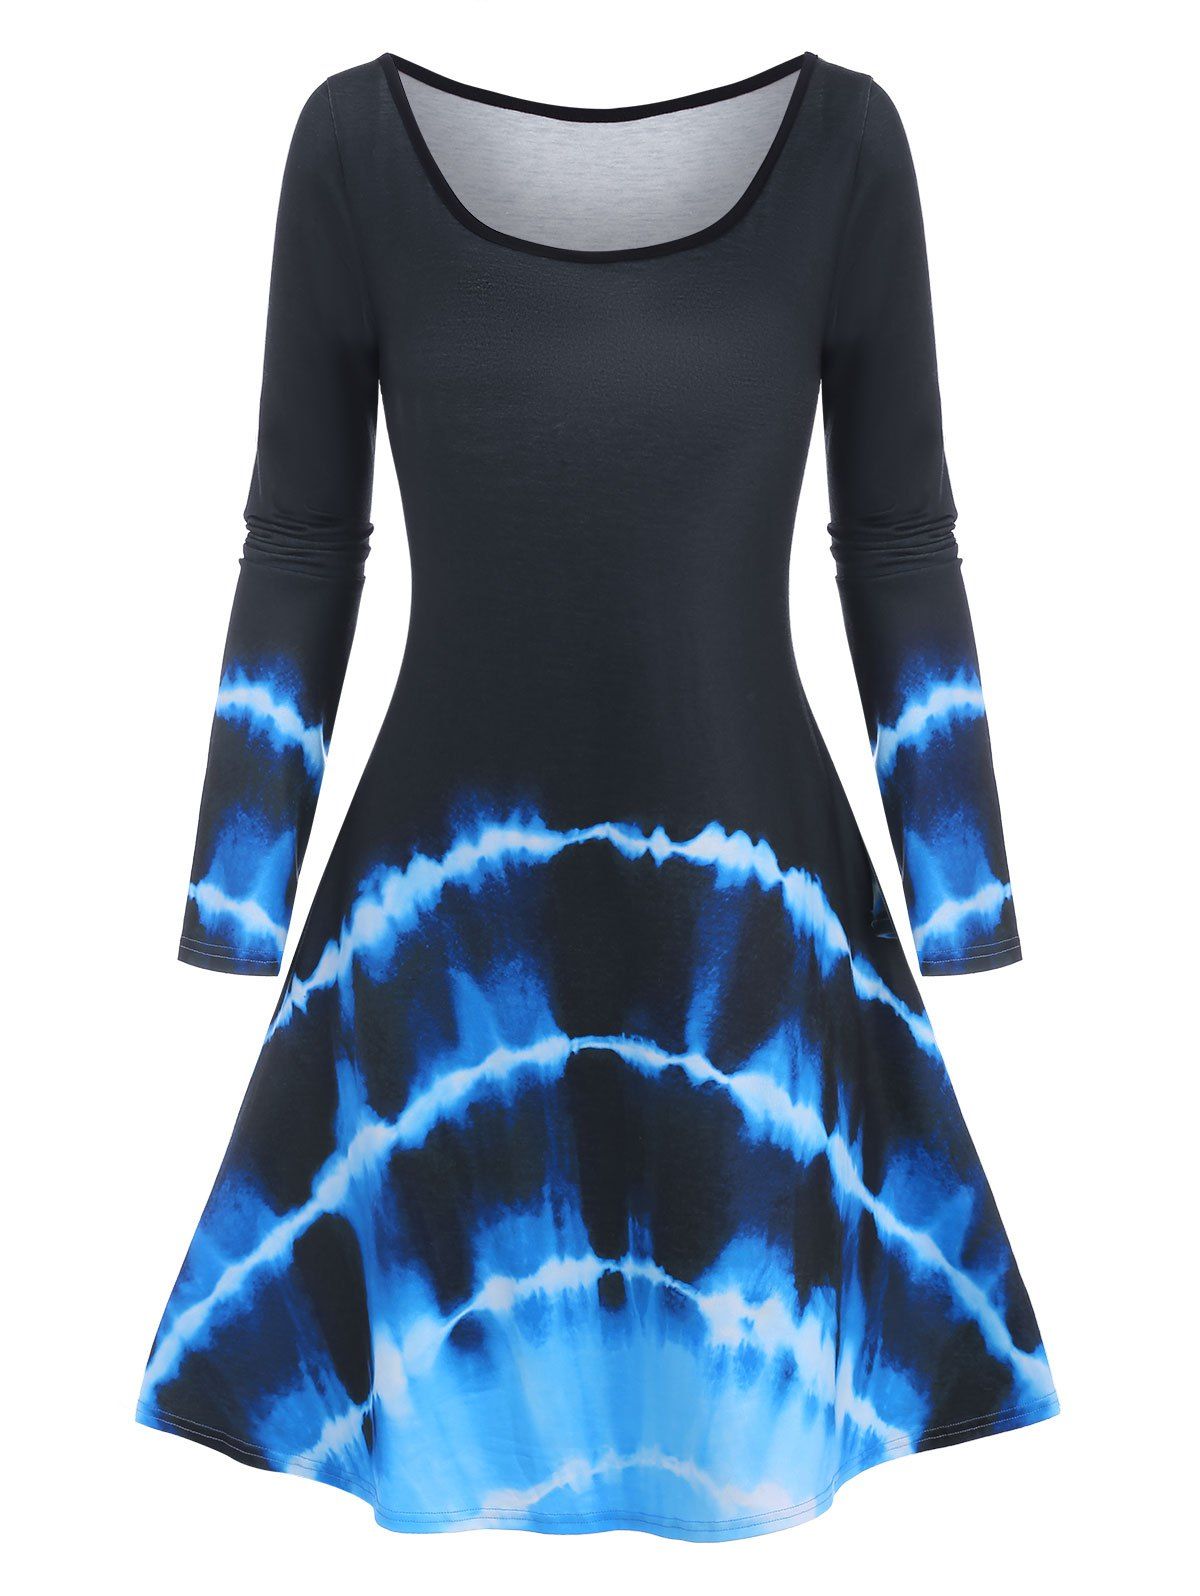 Casual Tie Dye Print A Line Long Sleeve Tee Dress - BLUE XXXL